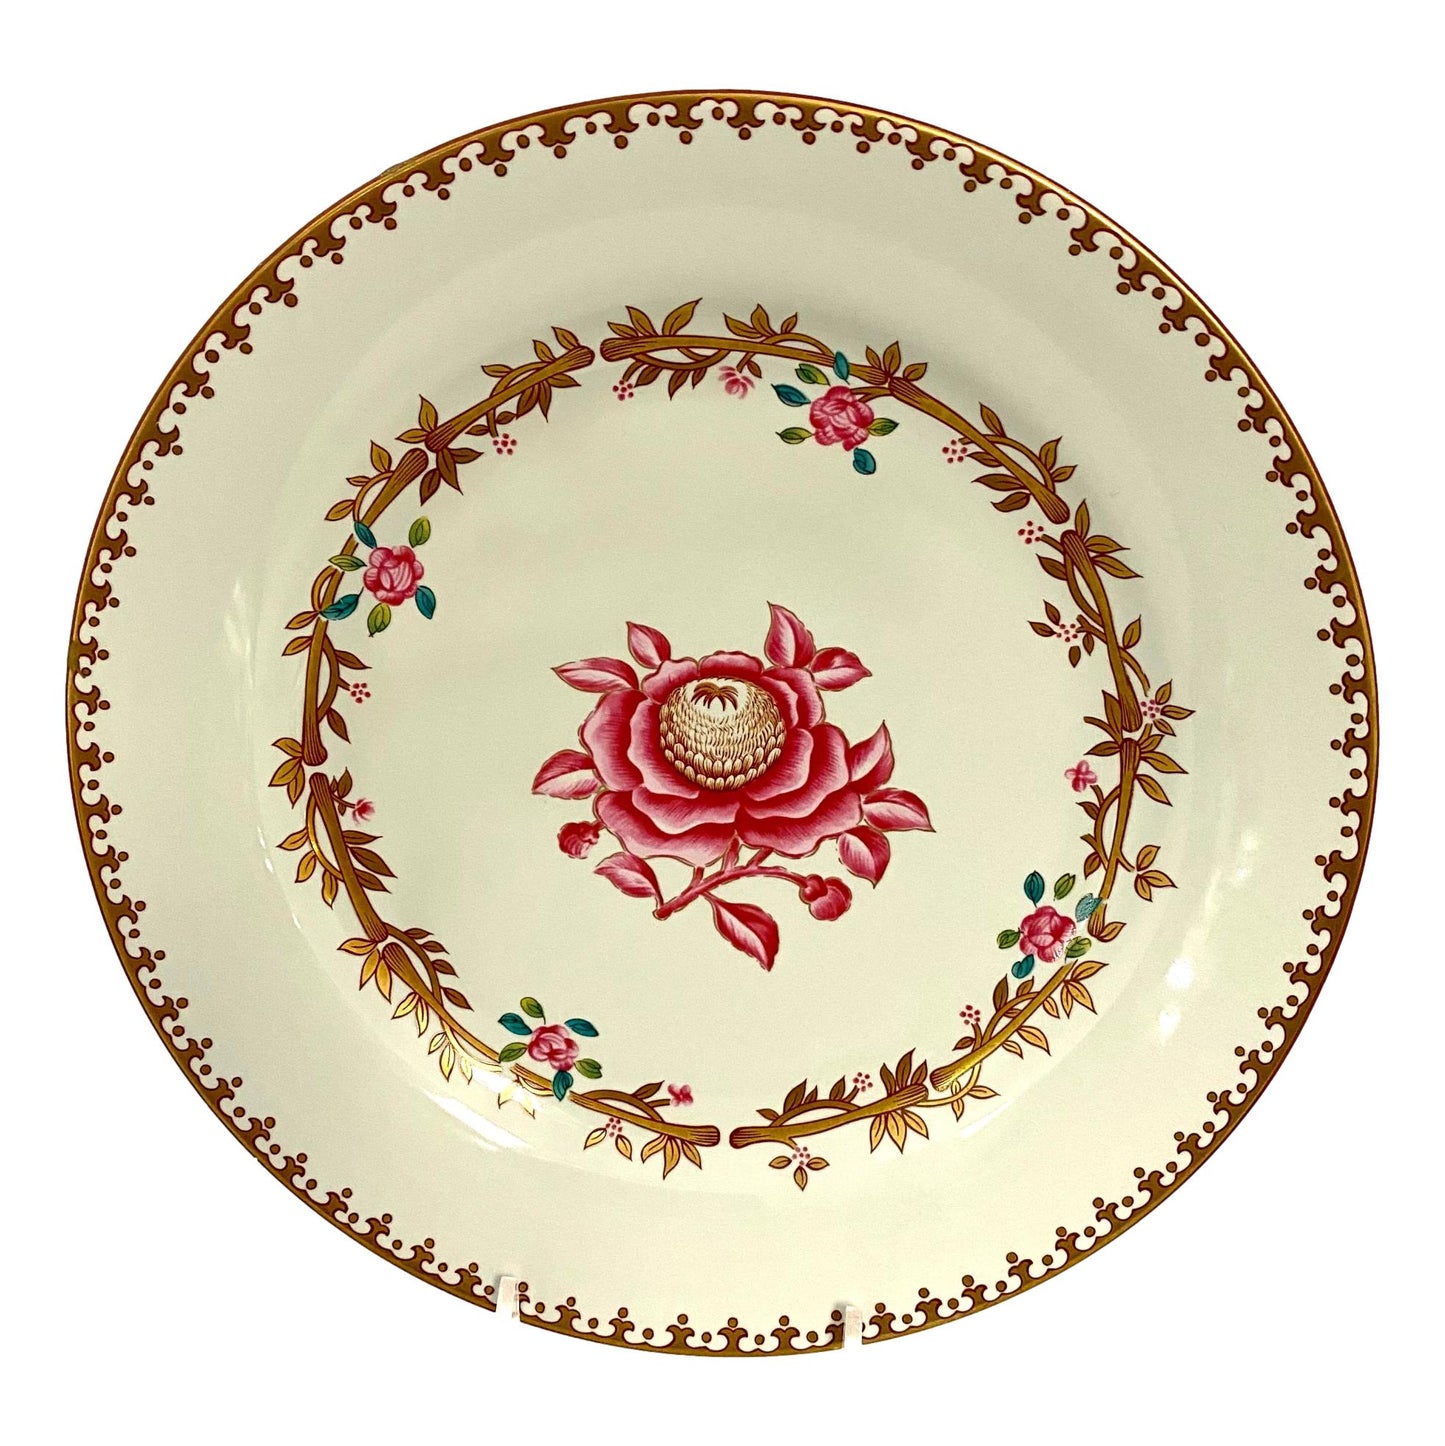 Abigail Adams Decorative Plate